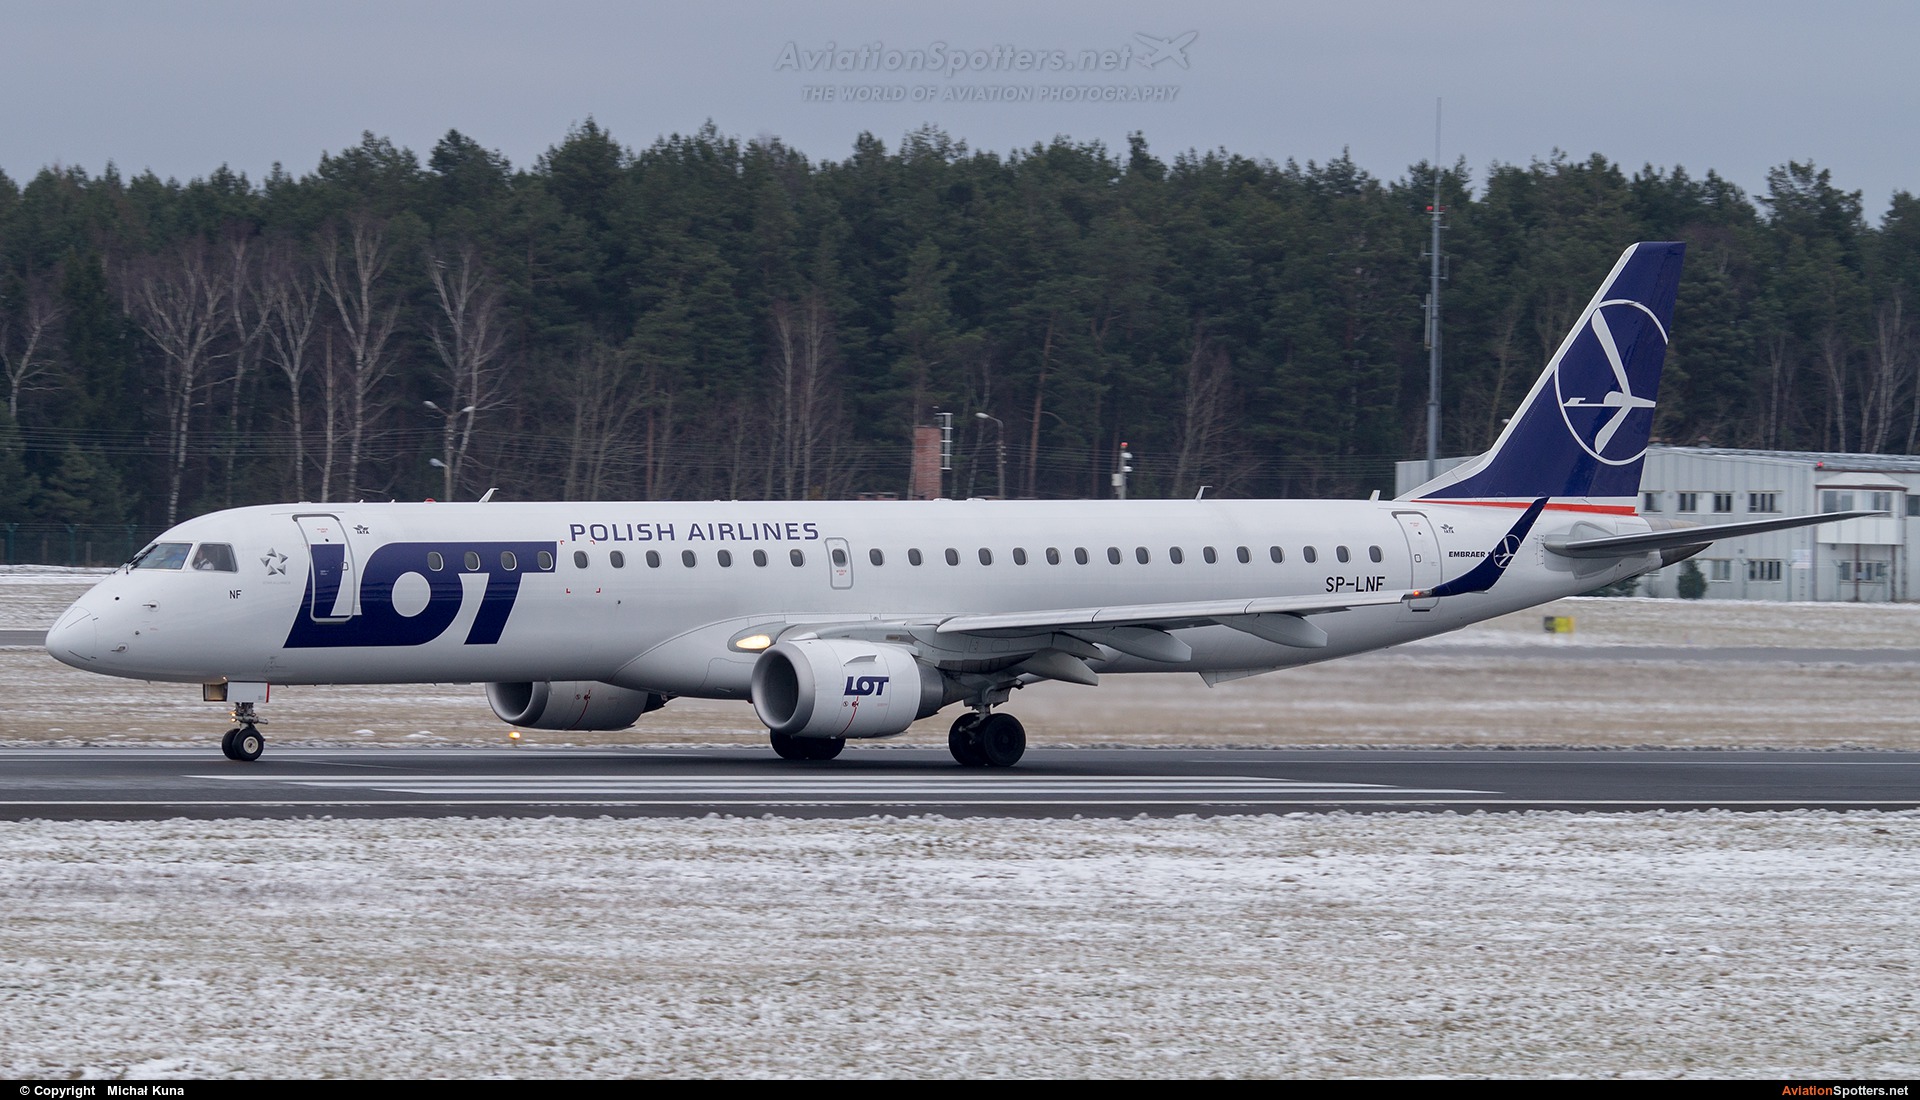 LOT - Polish Airlines  -  195LR  (SP-LNF) By Michał Kuna (big)